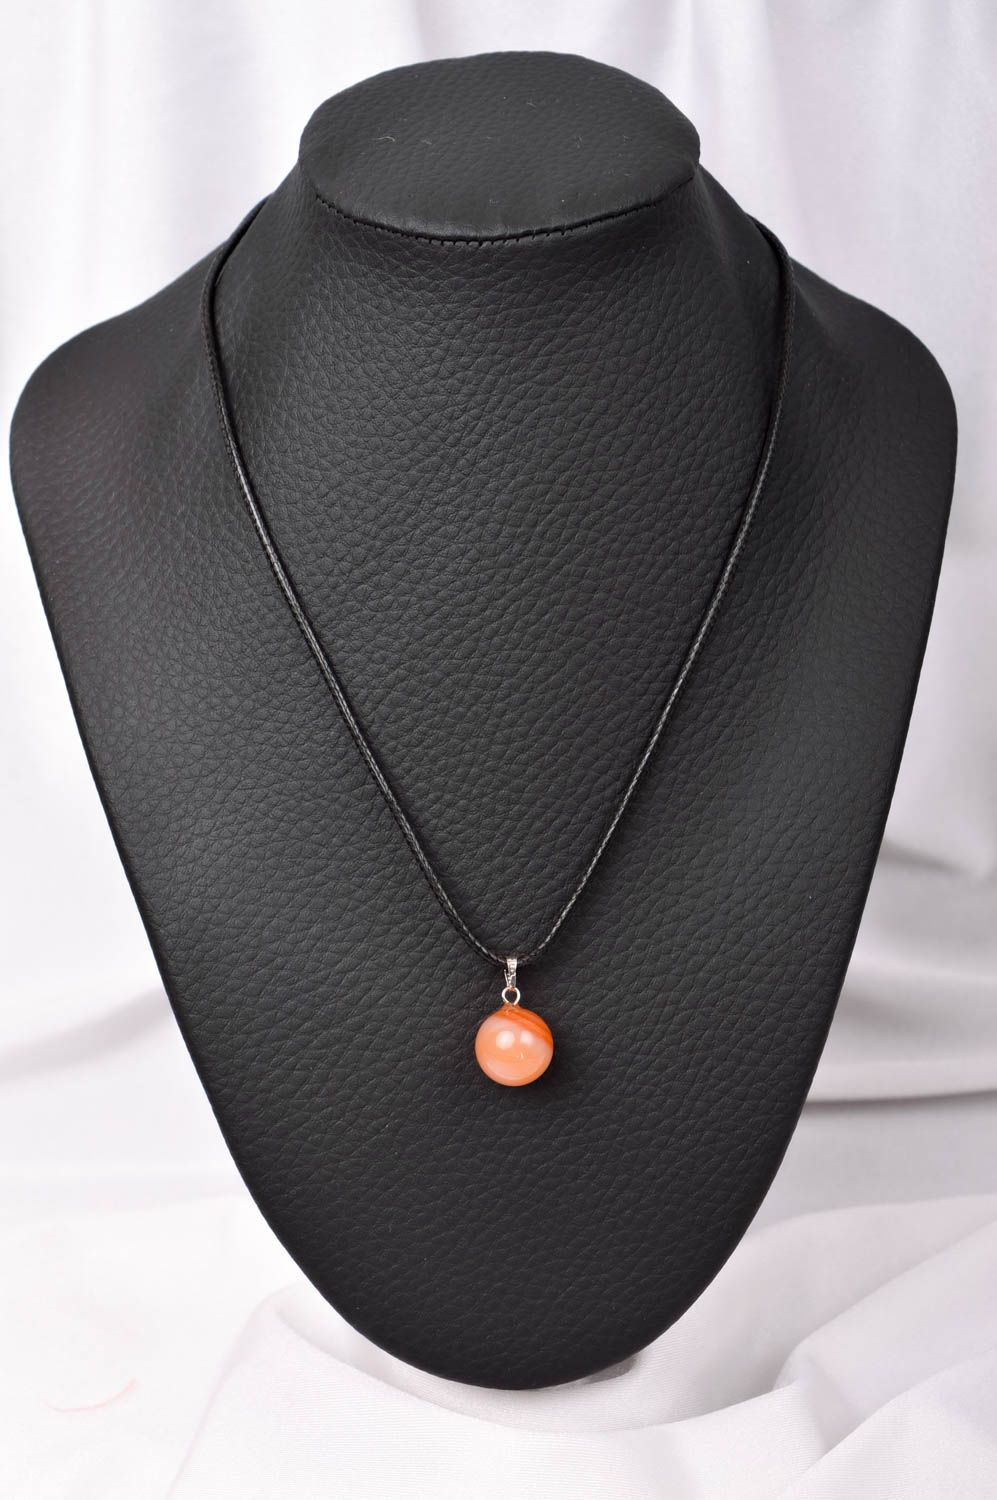 Quartz pendant handmade jewelry for women fashion pendant with natural stone  photo 1